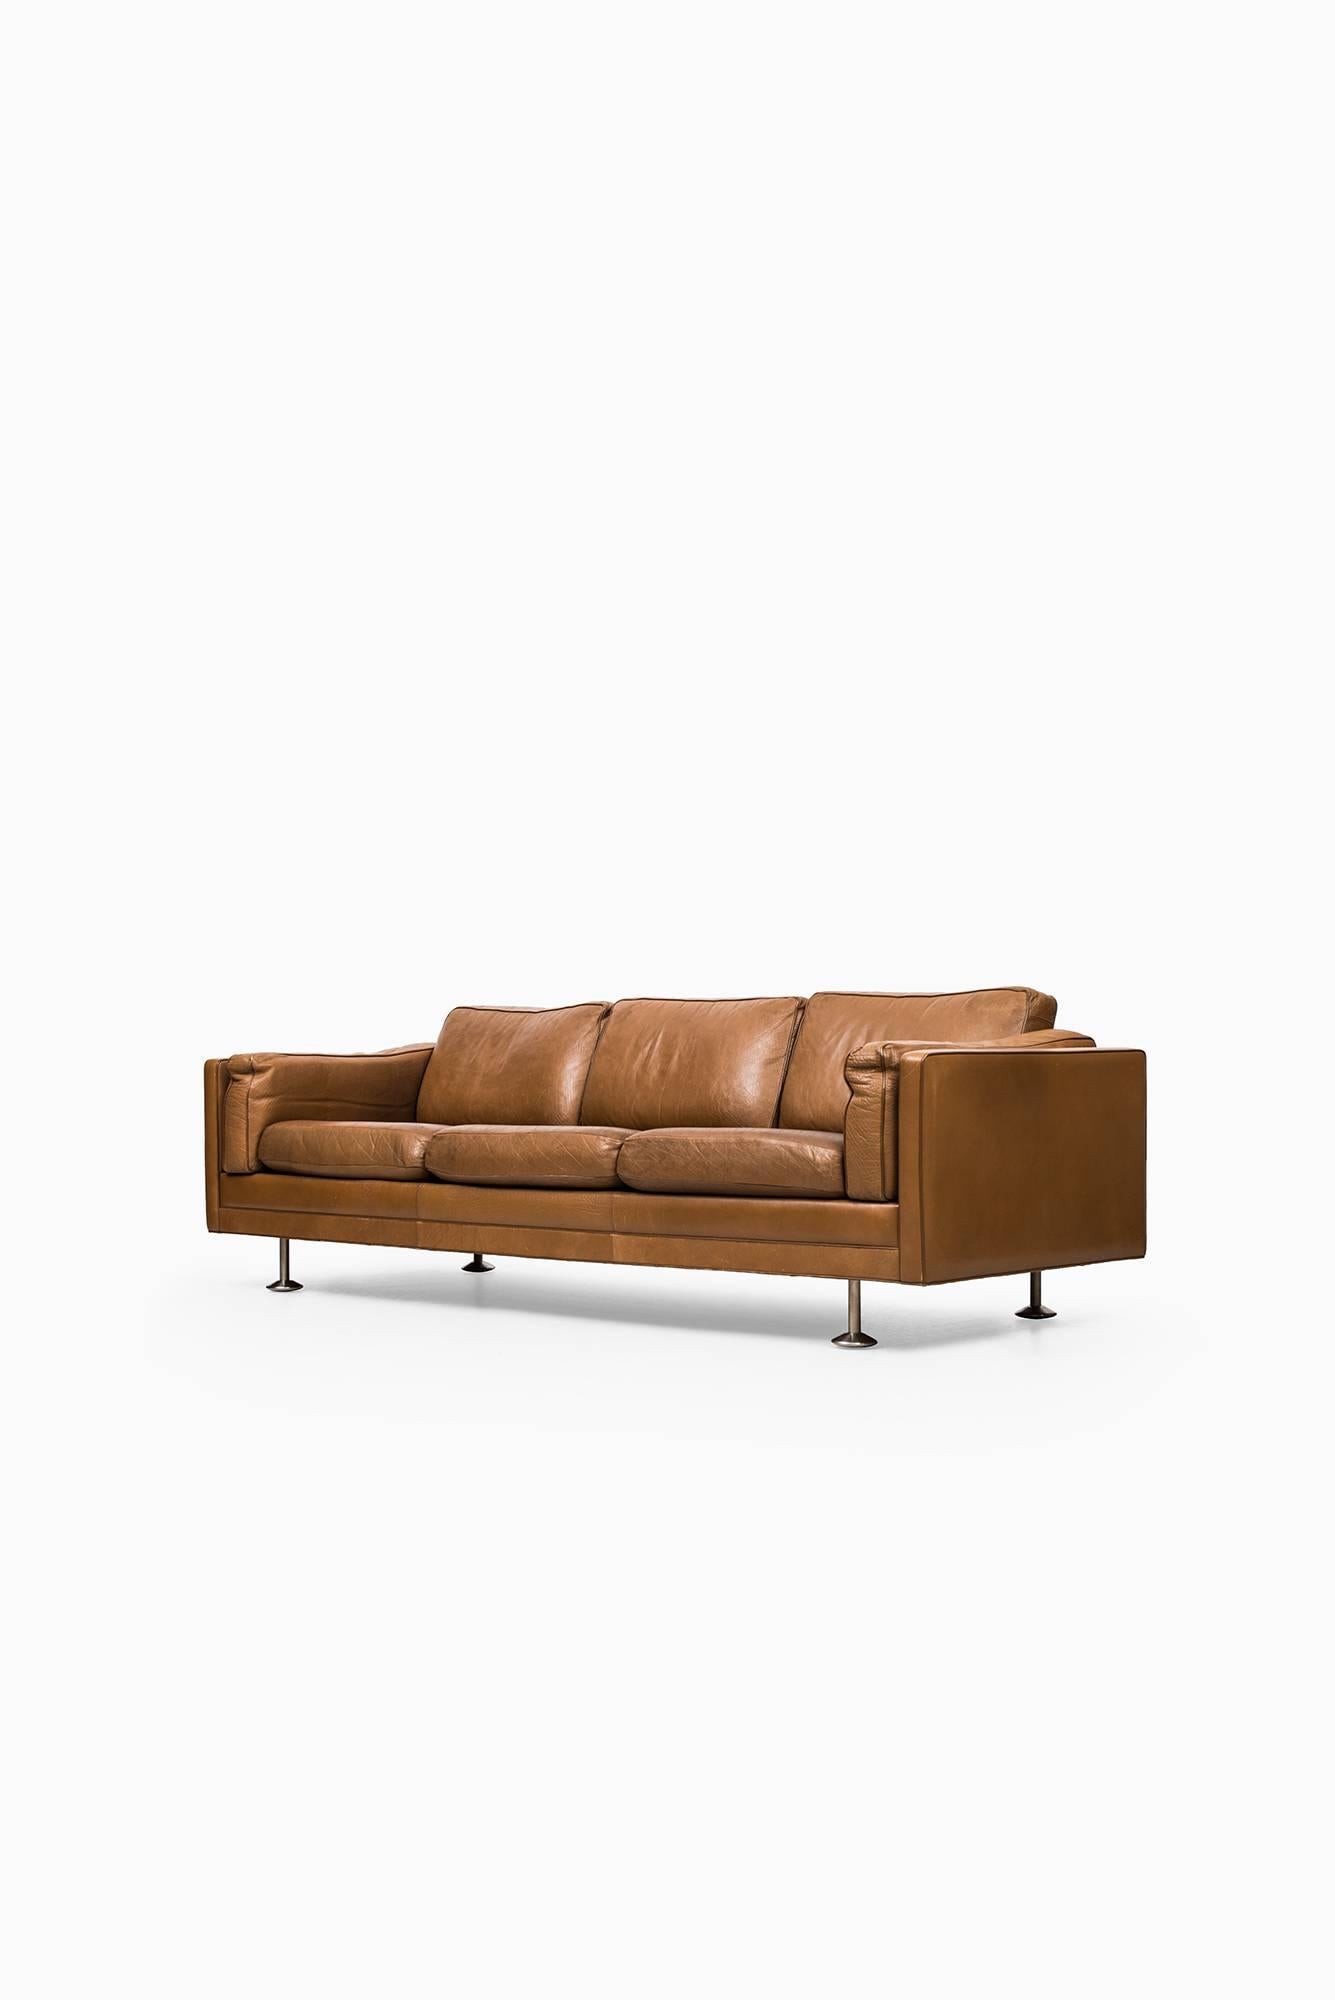 Scandinavian Modern Illum Wikkelsø Sofa in Brown Leather Produced in Denmark